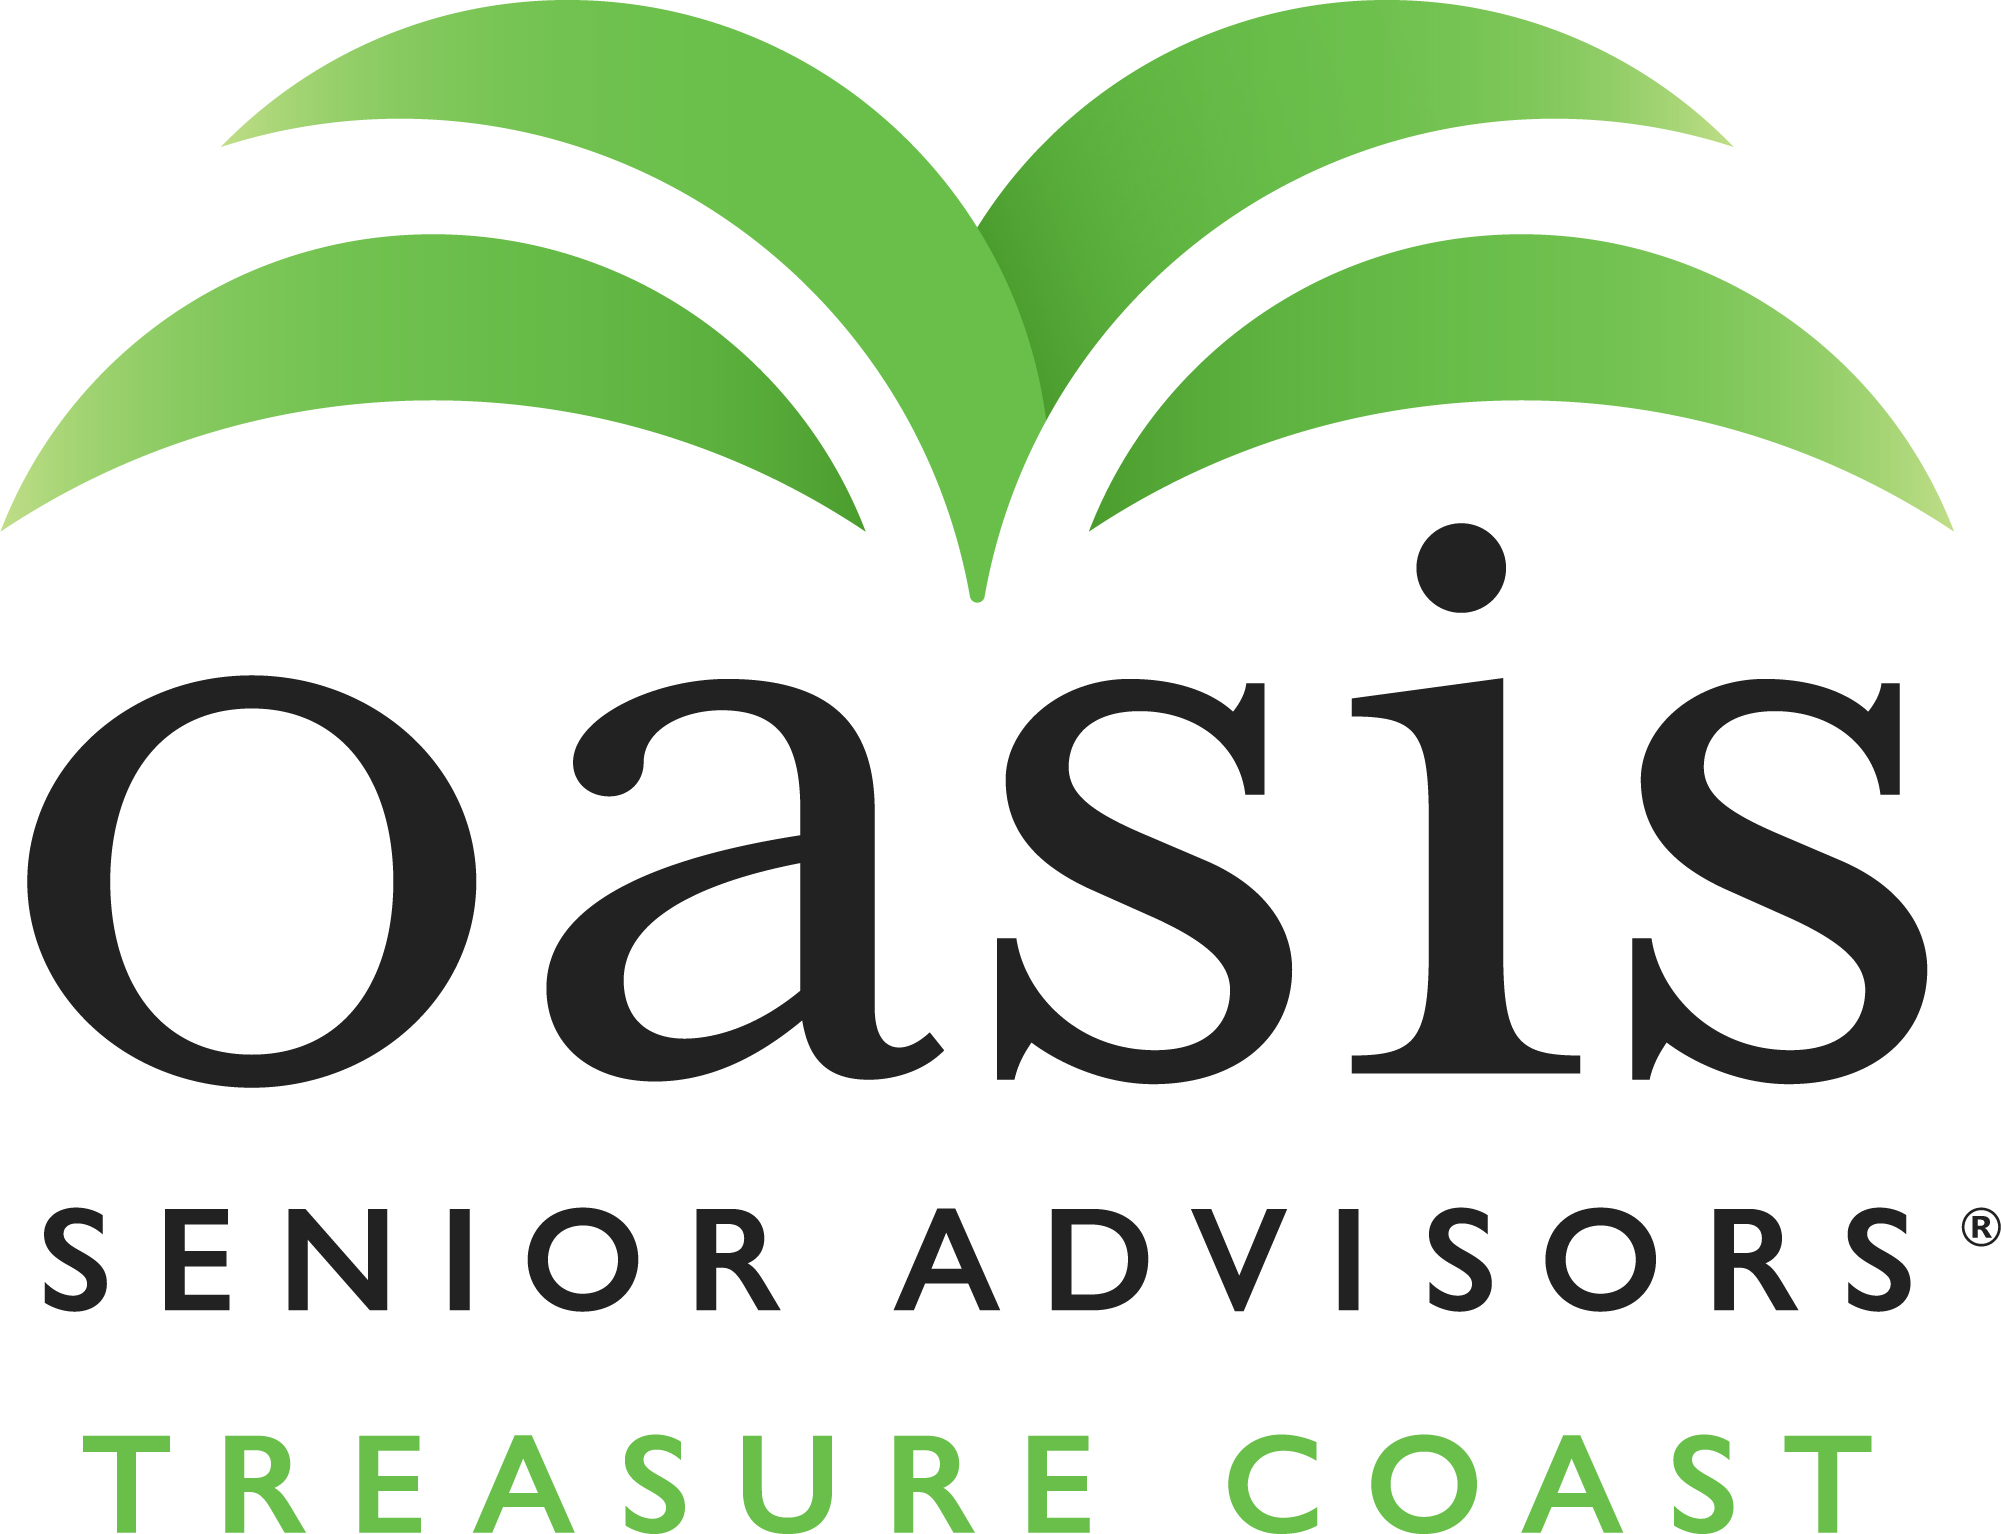 B3 Oasis Senior Advisors (Hydration Station)